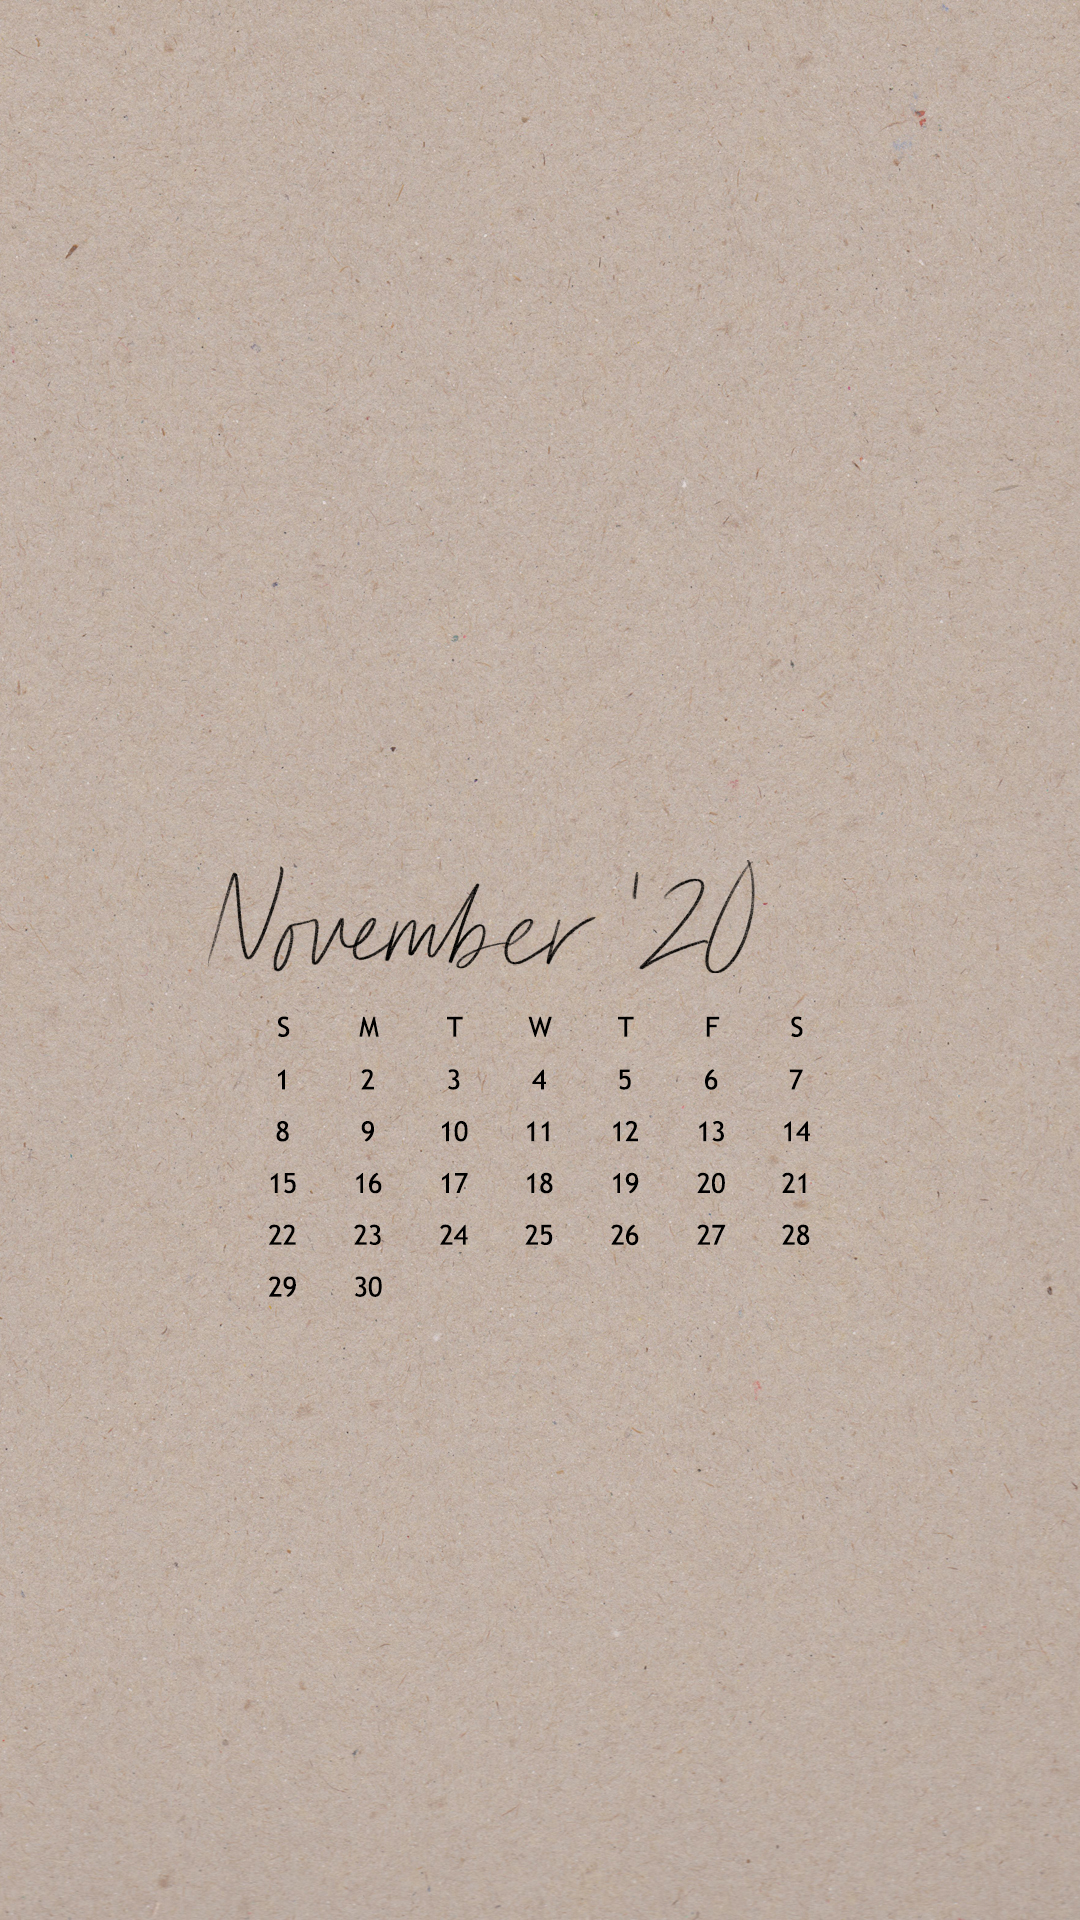 November Phone Wallpapers